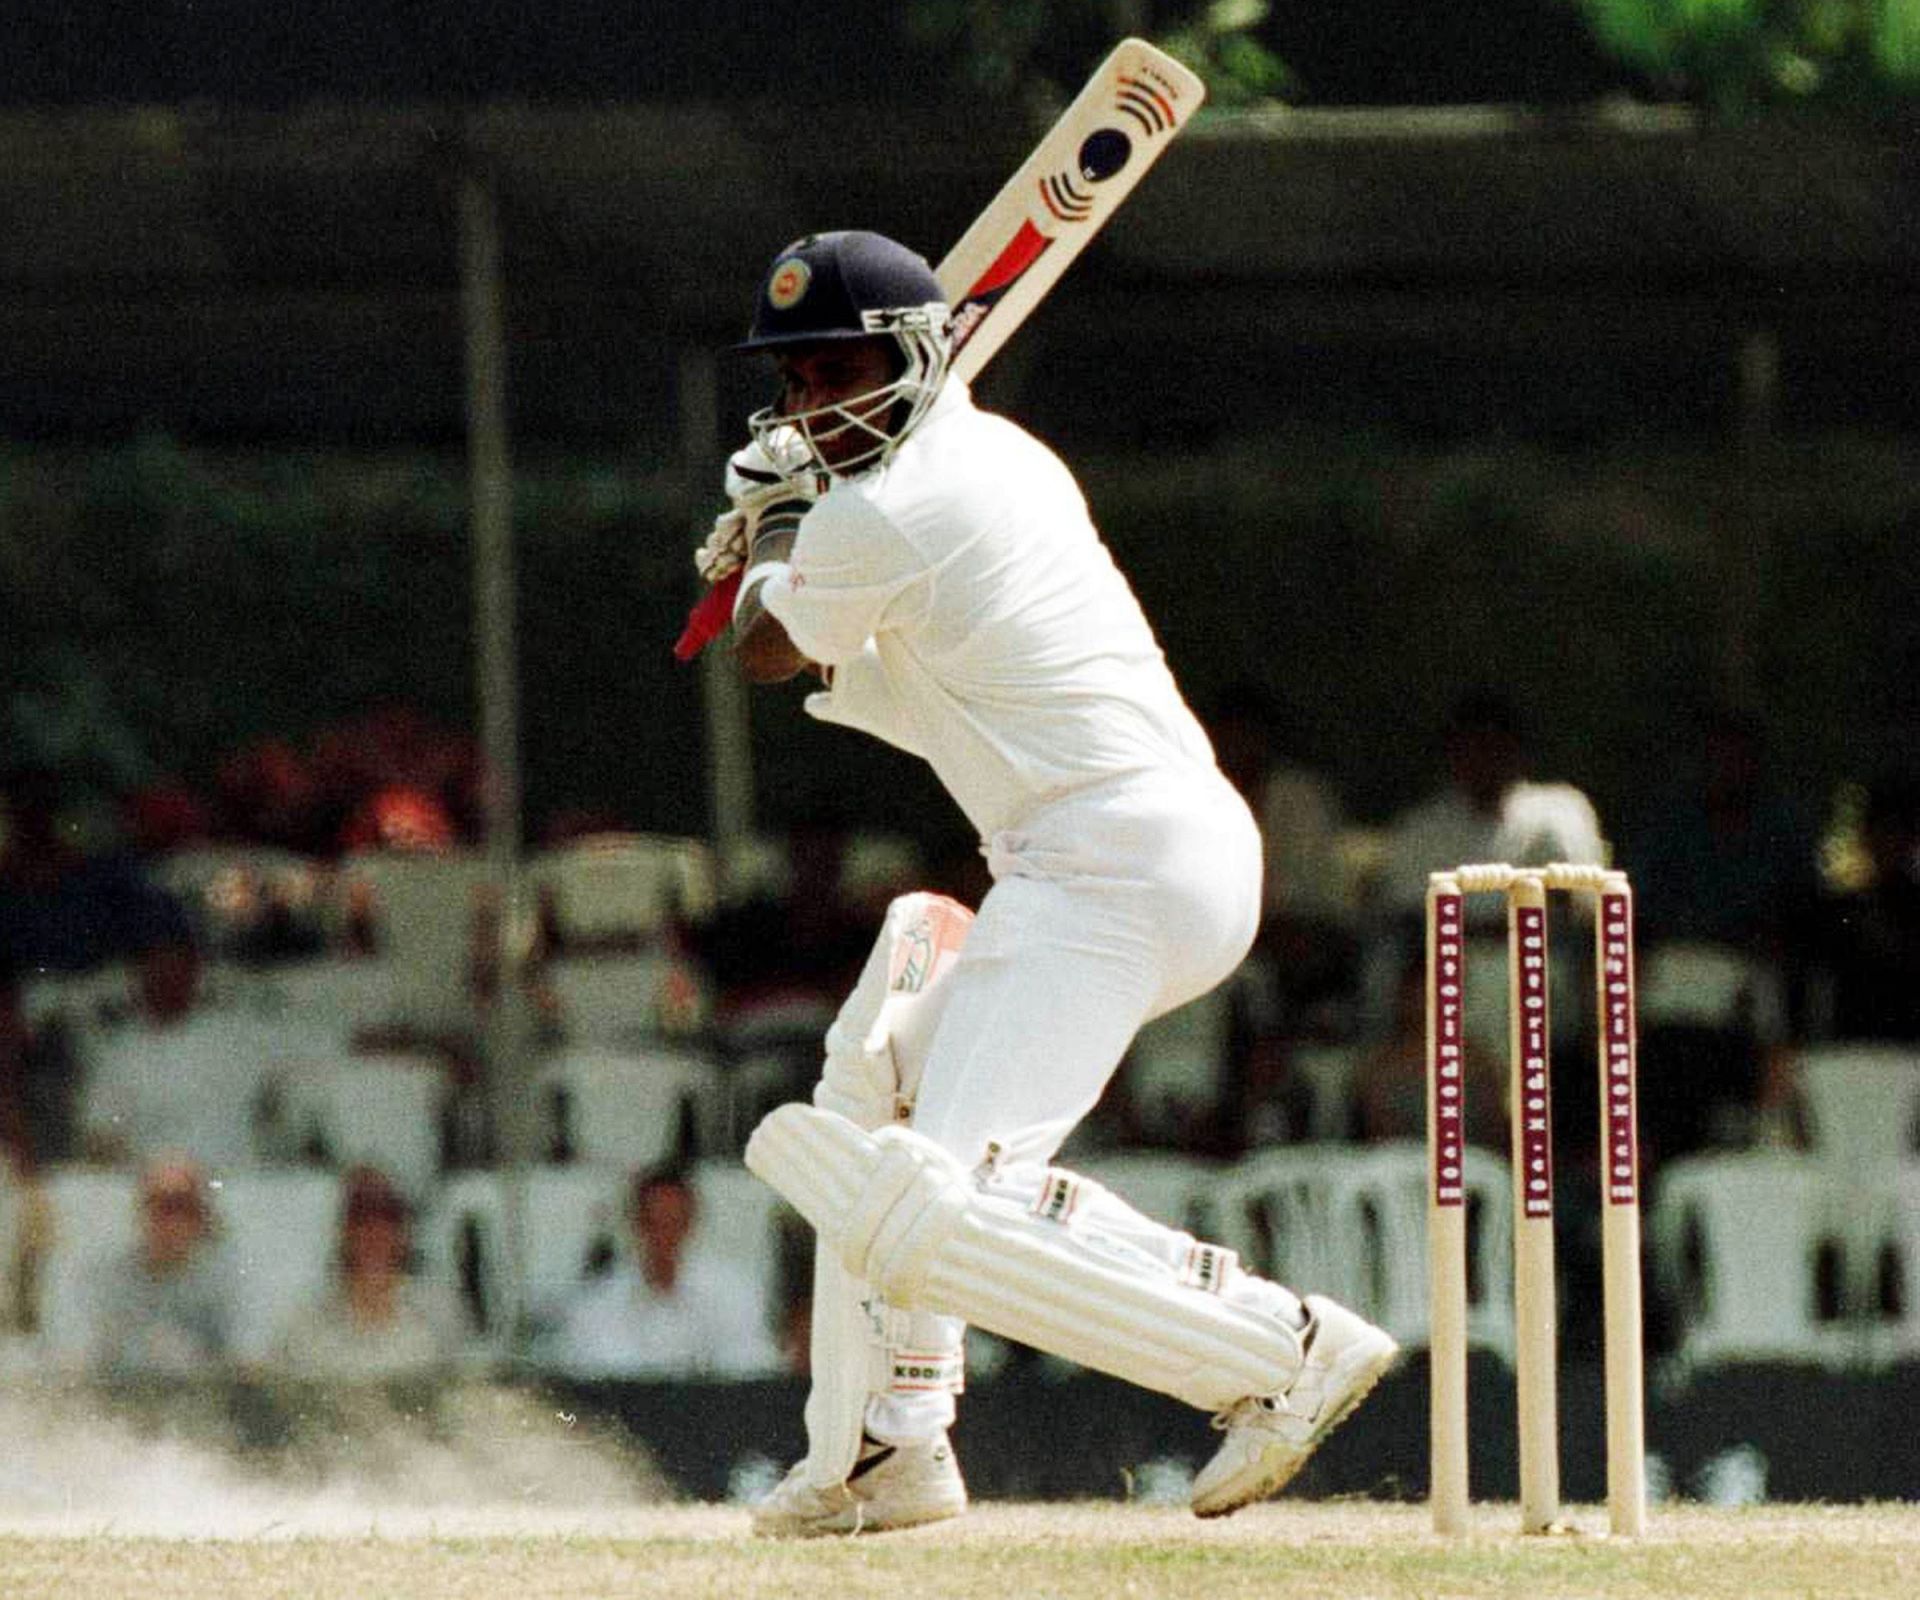 Sanath Jayasuriya changed the dynamics of how batsmen viewed batting against the new ball